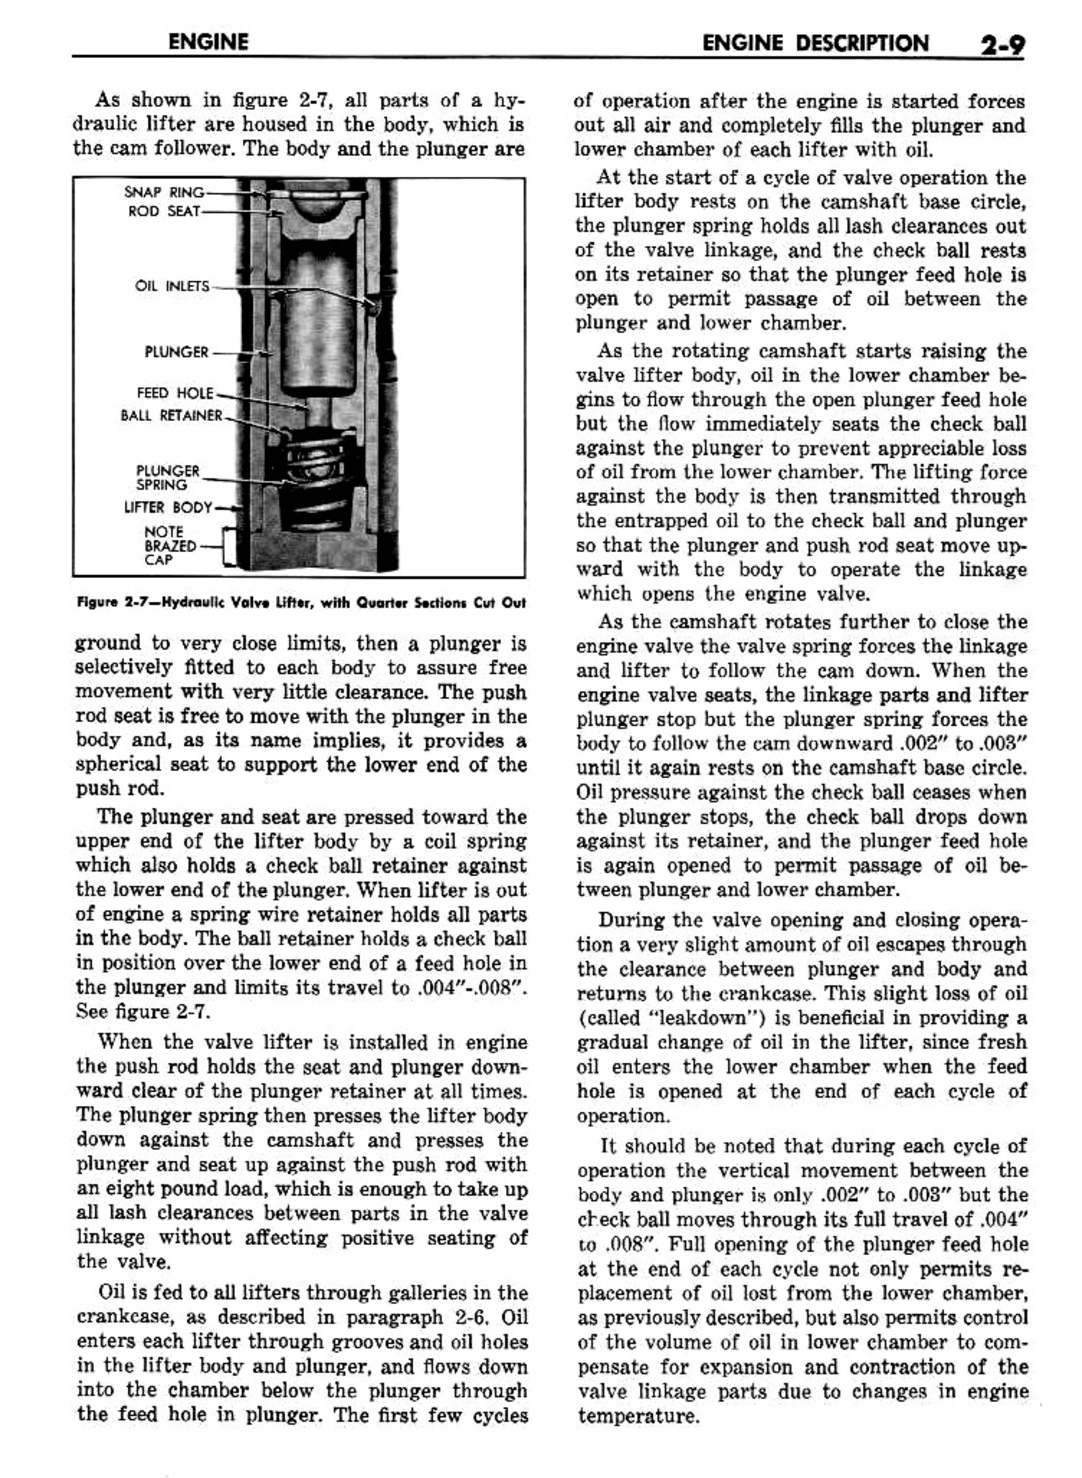 n_03 1957 Buick Shop Manual - Engine-009-009.jpg